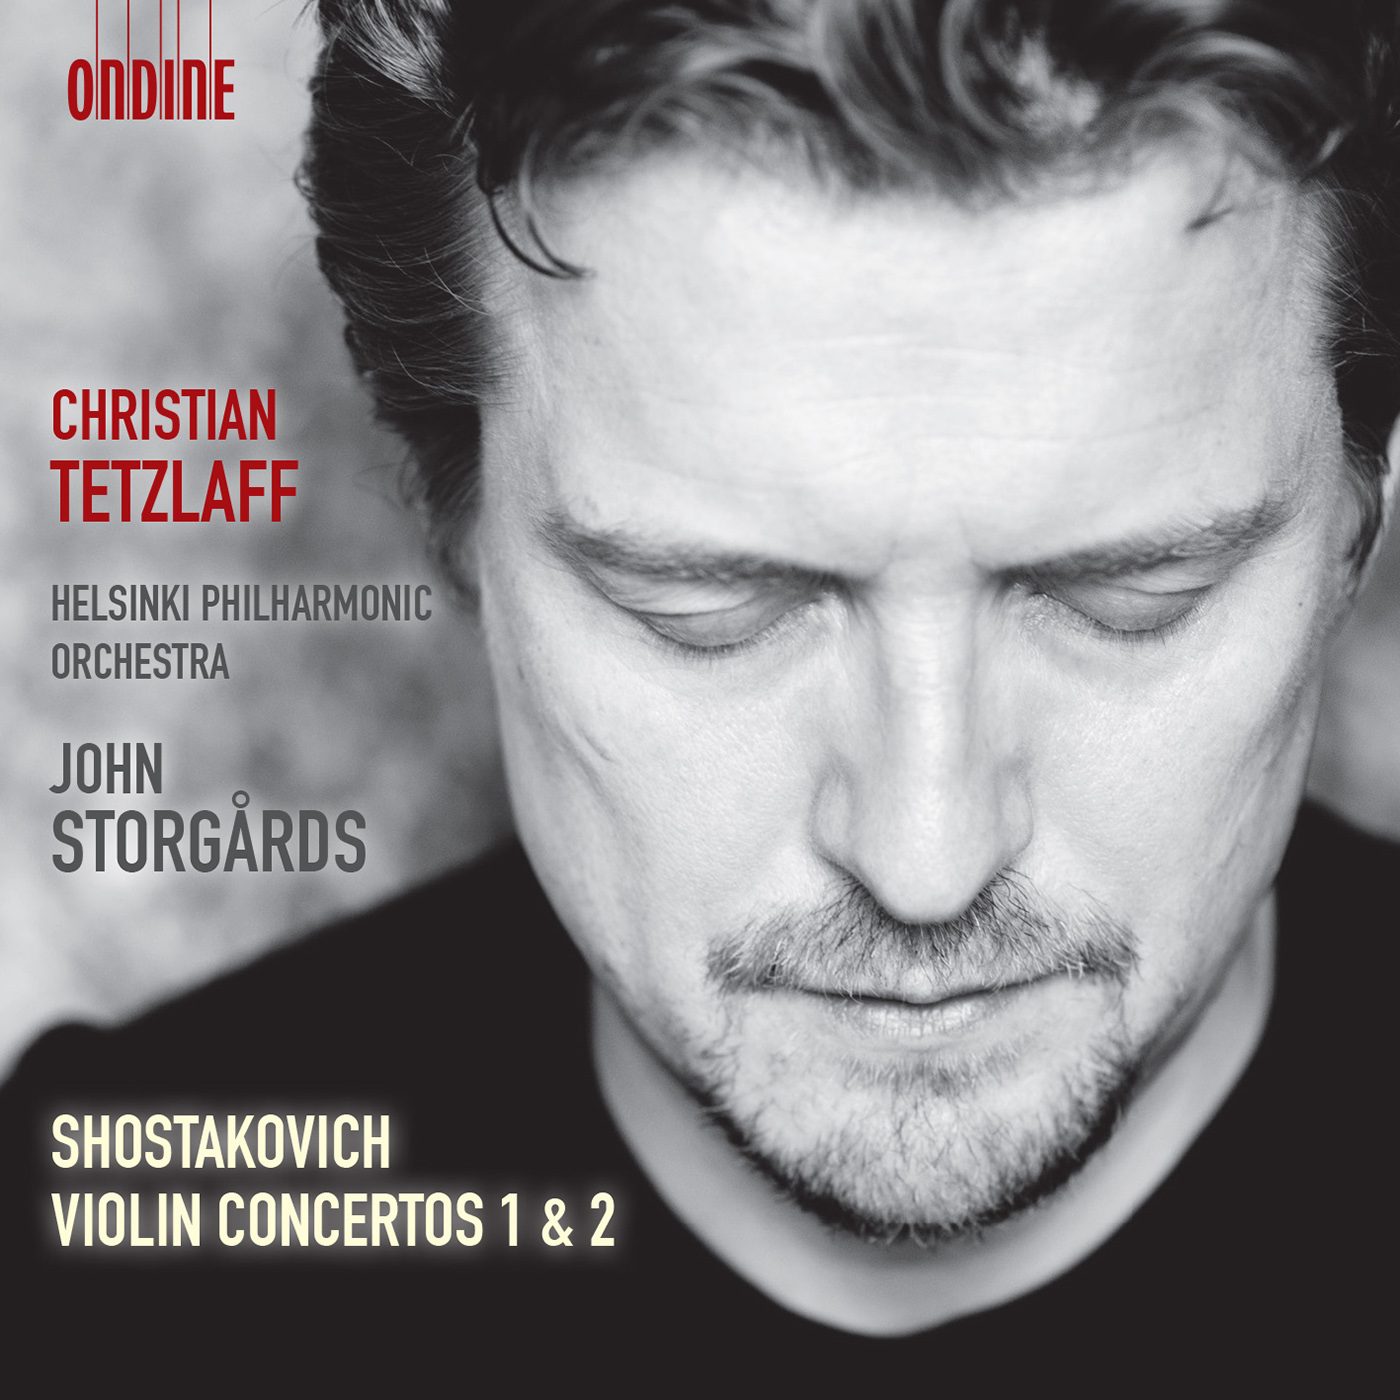 SHOSTAKOVICH, D.: Violin Concertos Nos. 1 and 2 Tetzlaff, Helsinki Philharmonic, Storg rds